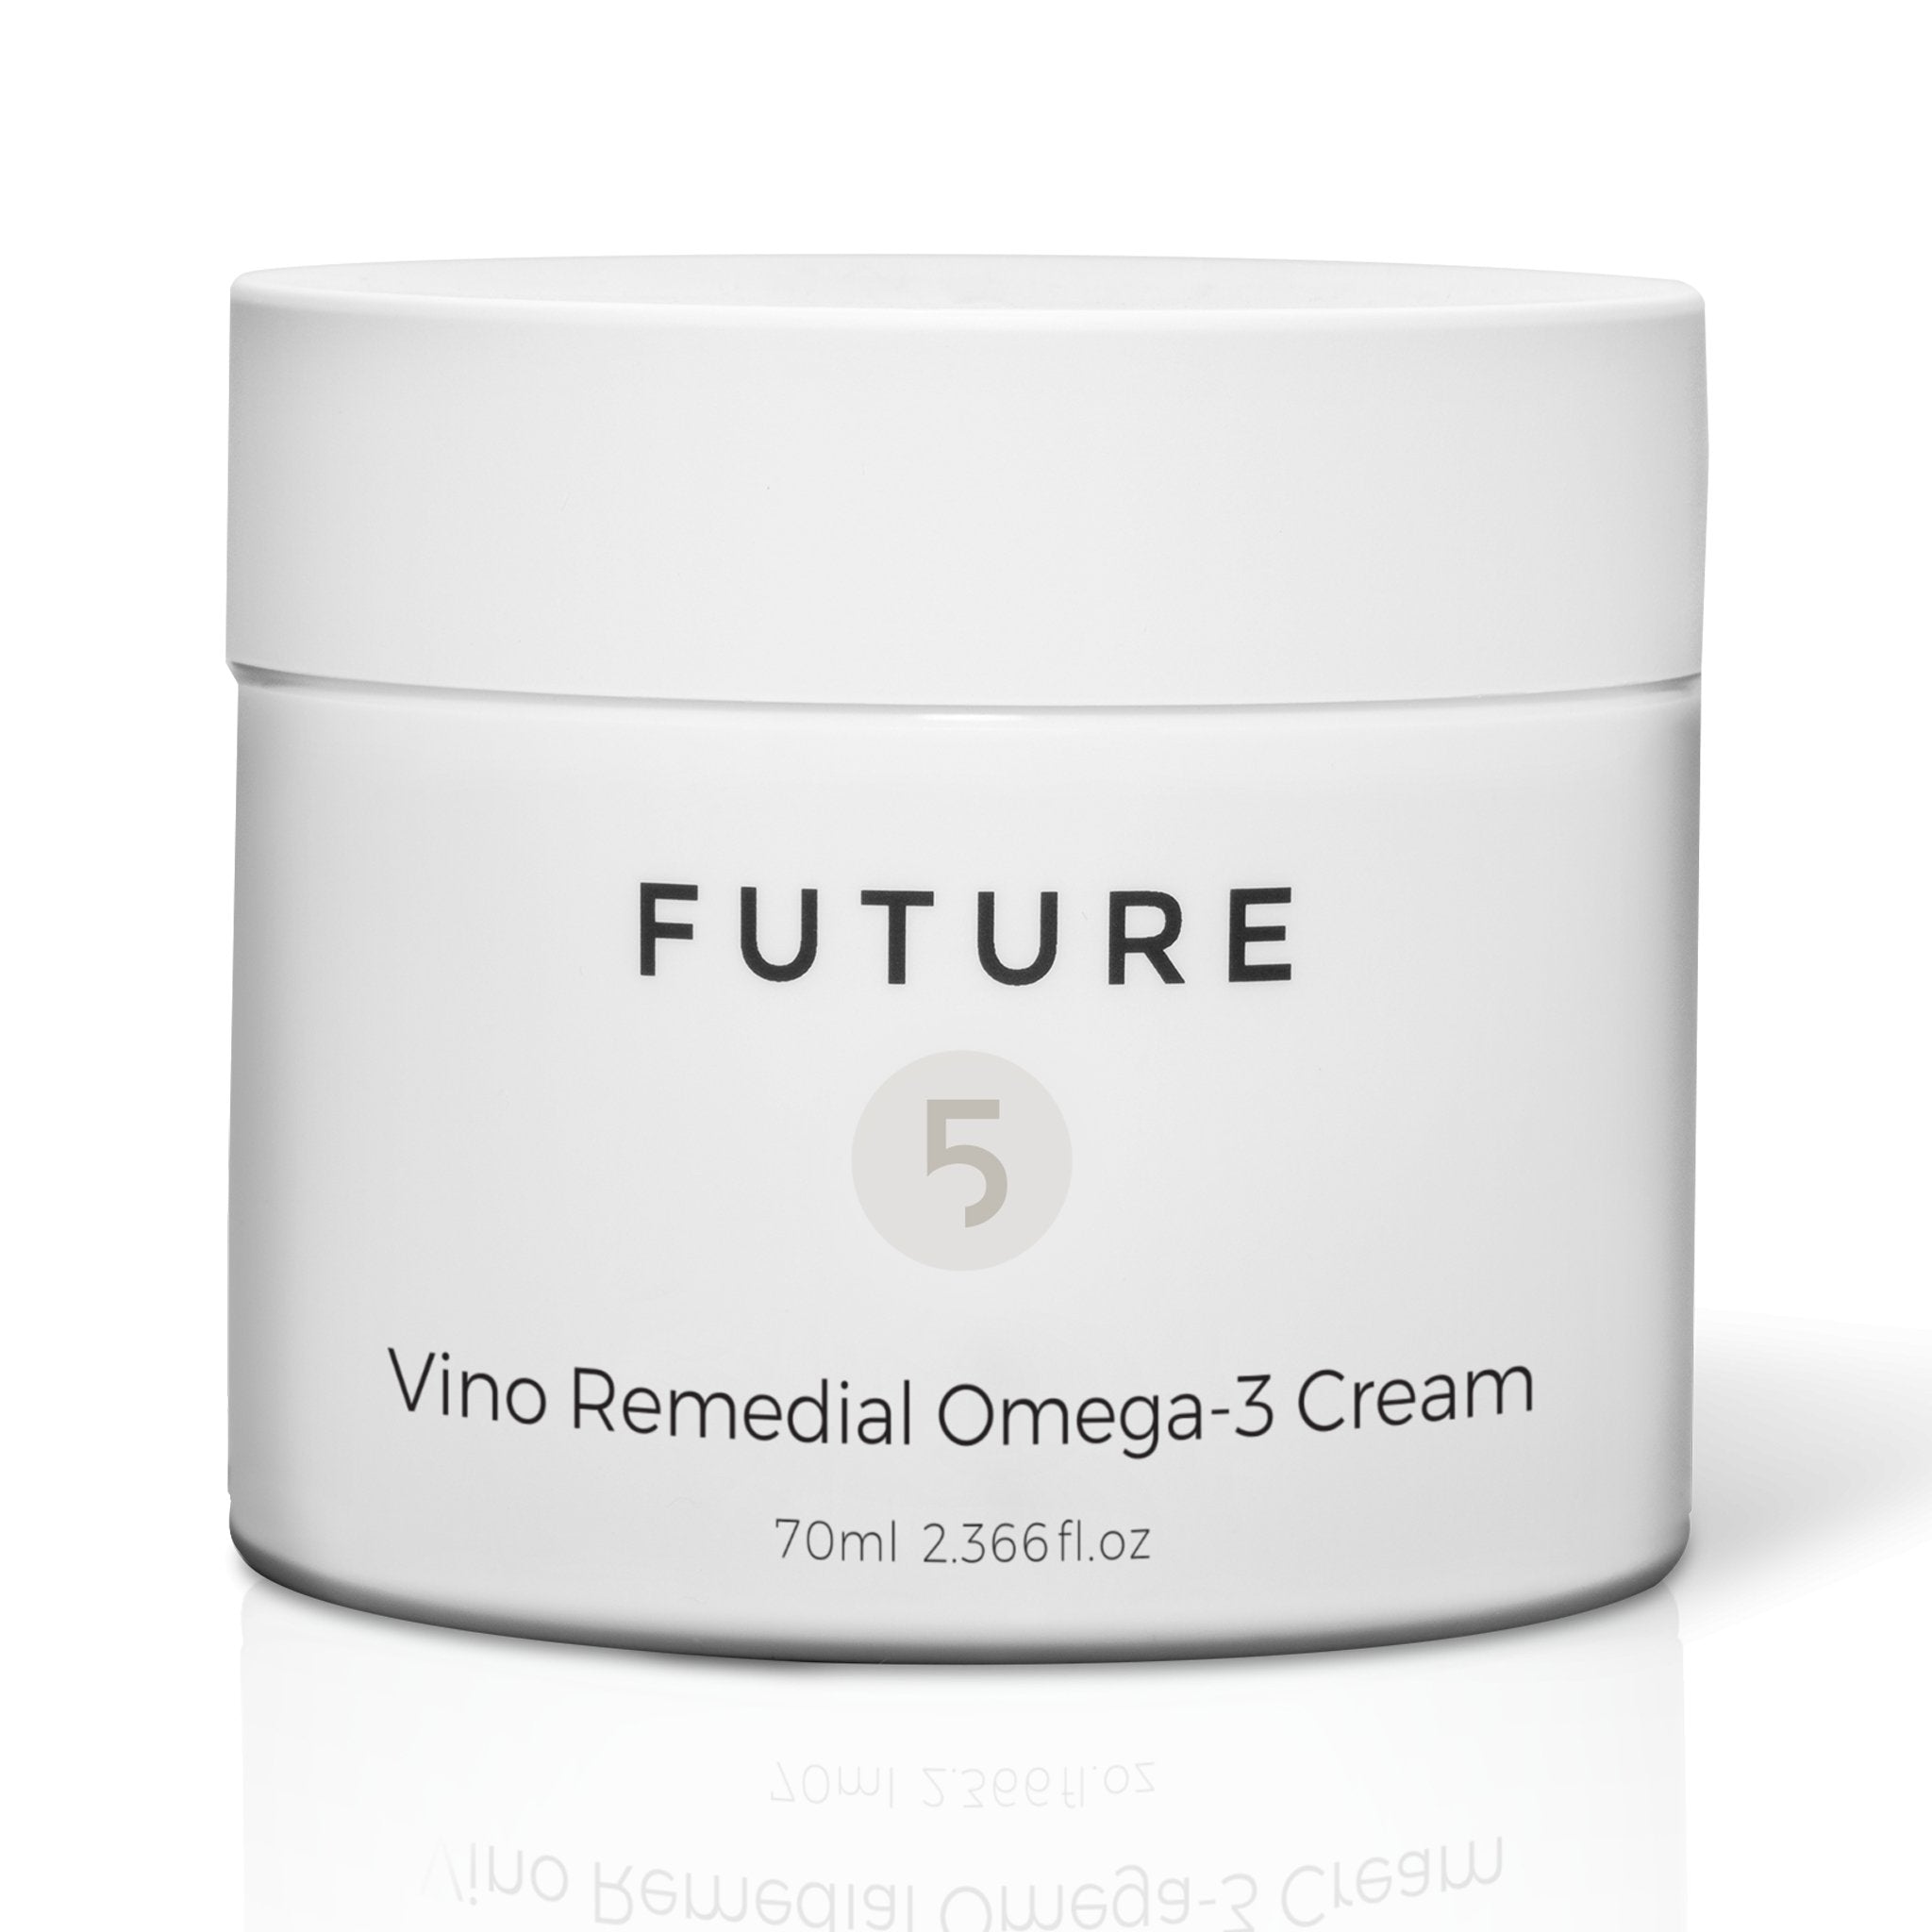 Vino Remedial Omega 3 Face Cream - Future Cosmetics The 5 Elements